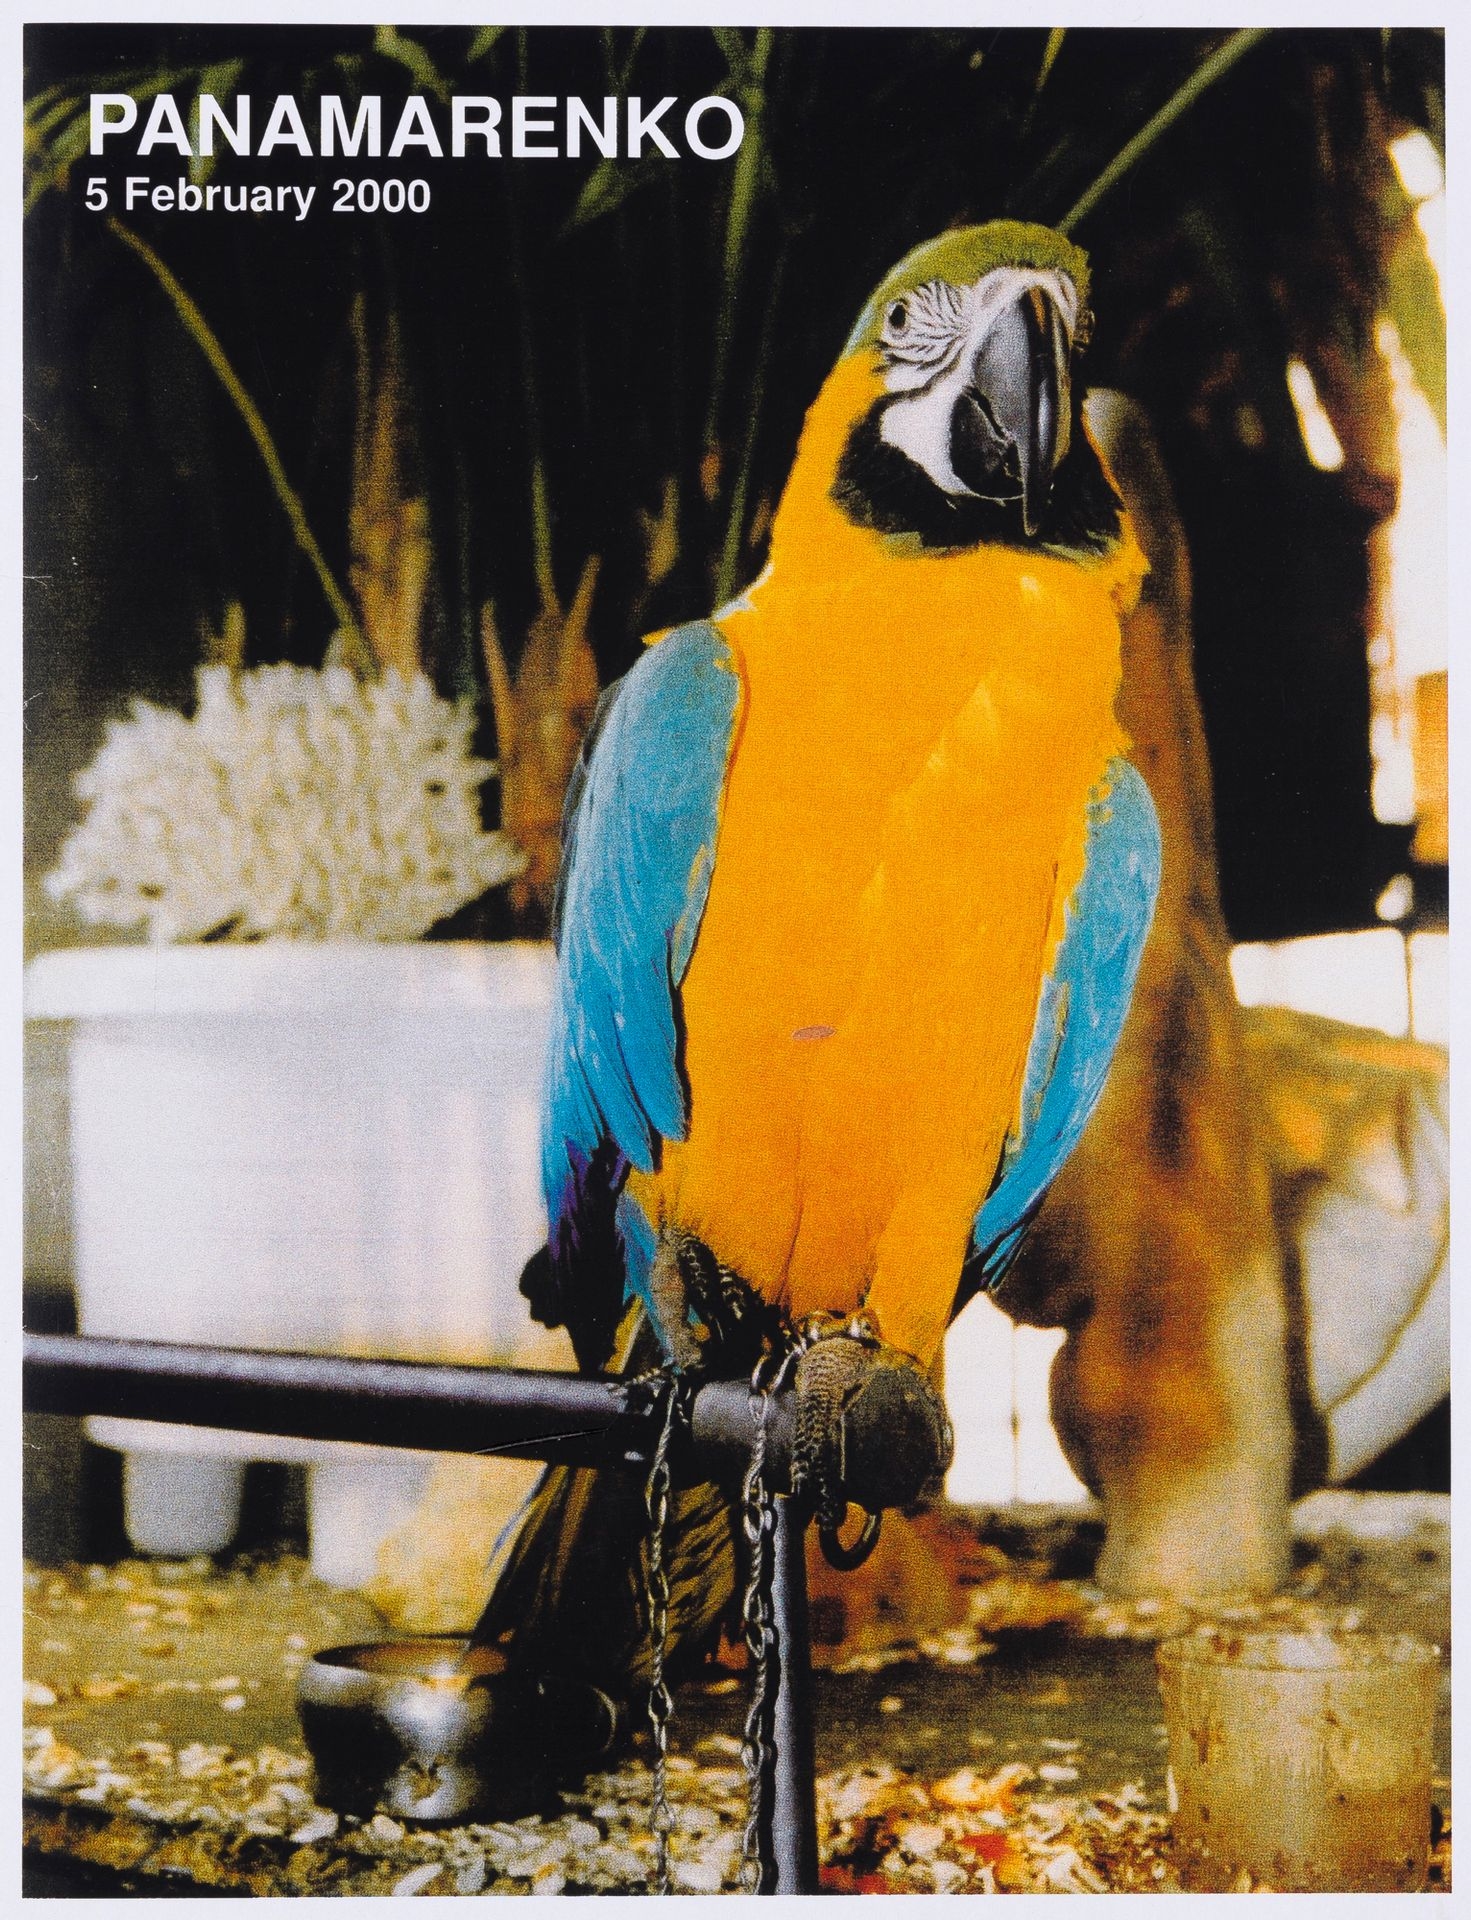 The Parrot by Panamarenko